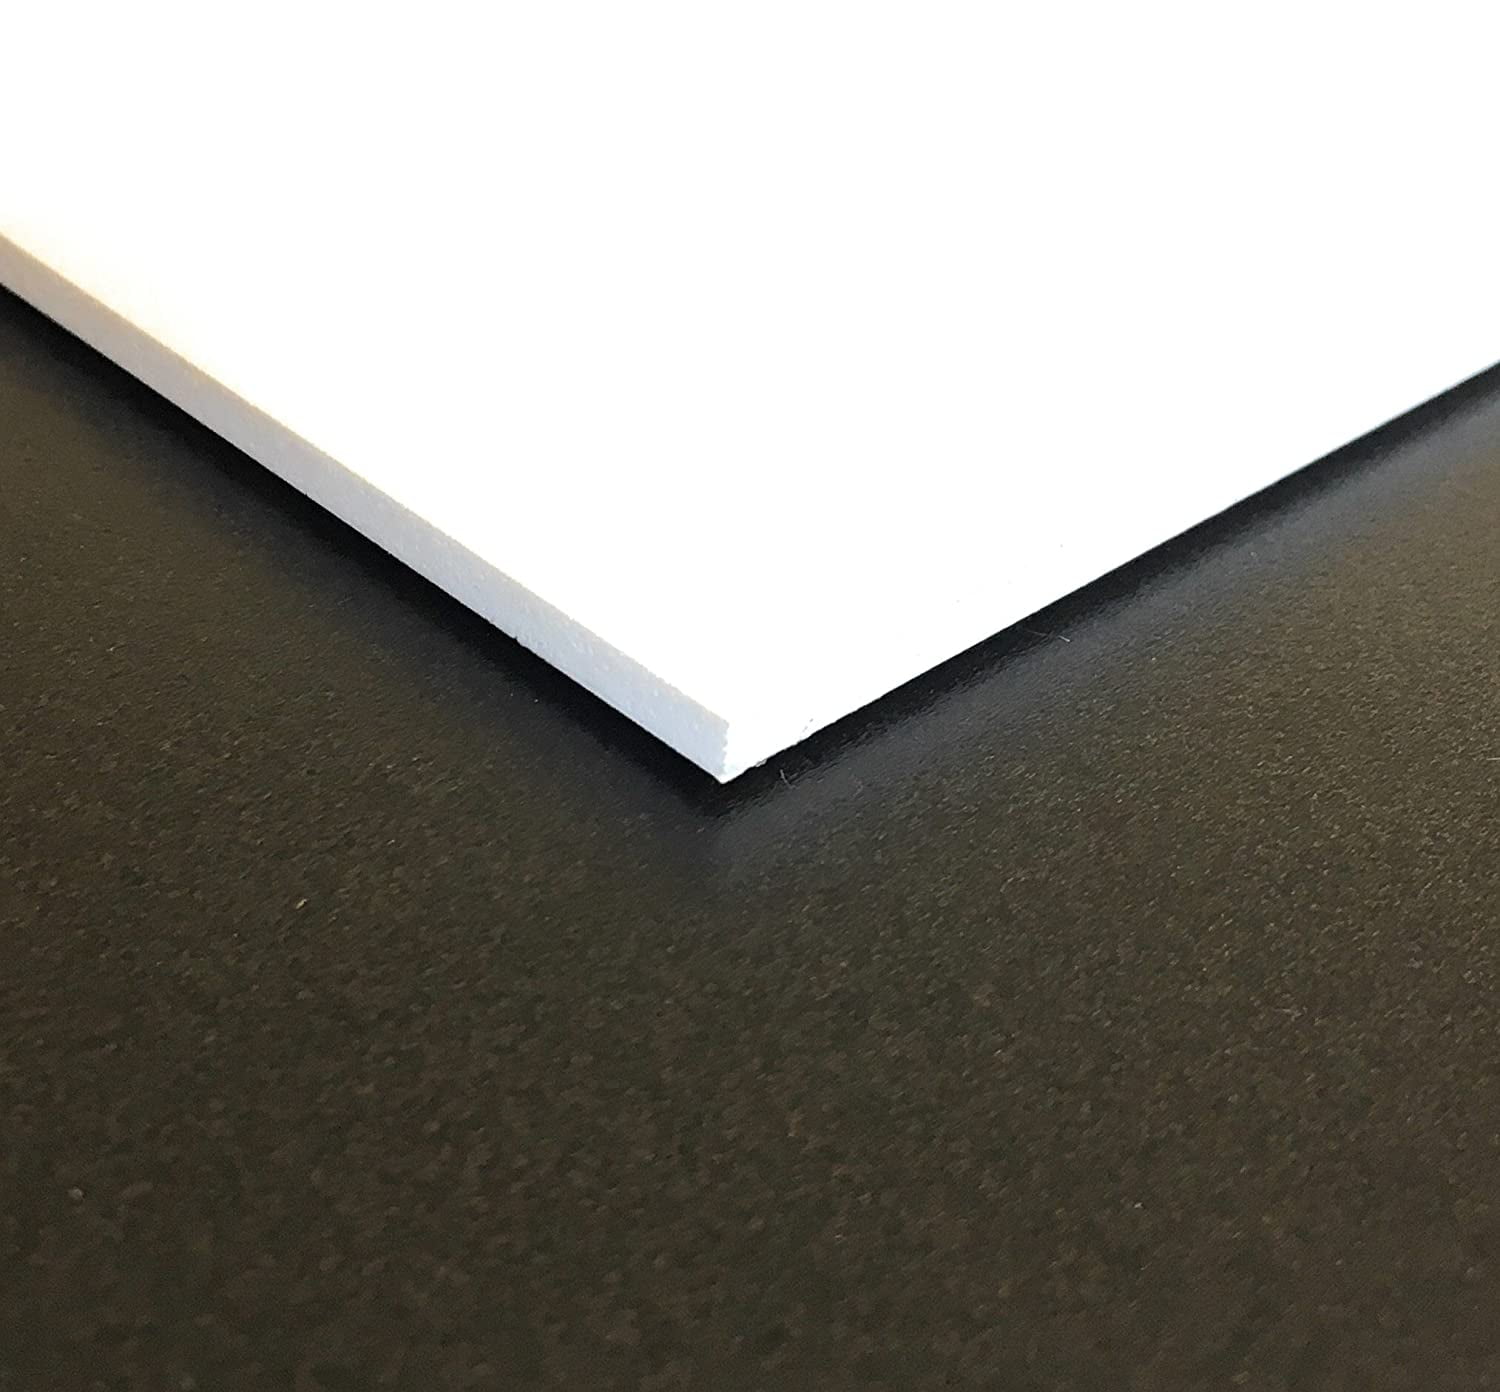 1/8" x 24" x 48" PVC Expanded Plastic Sheet 3mm White Color 